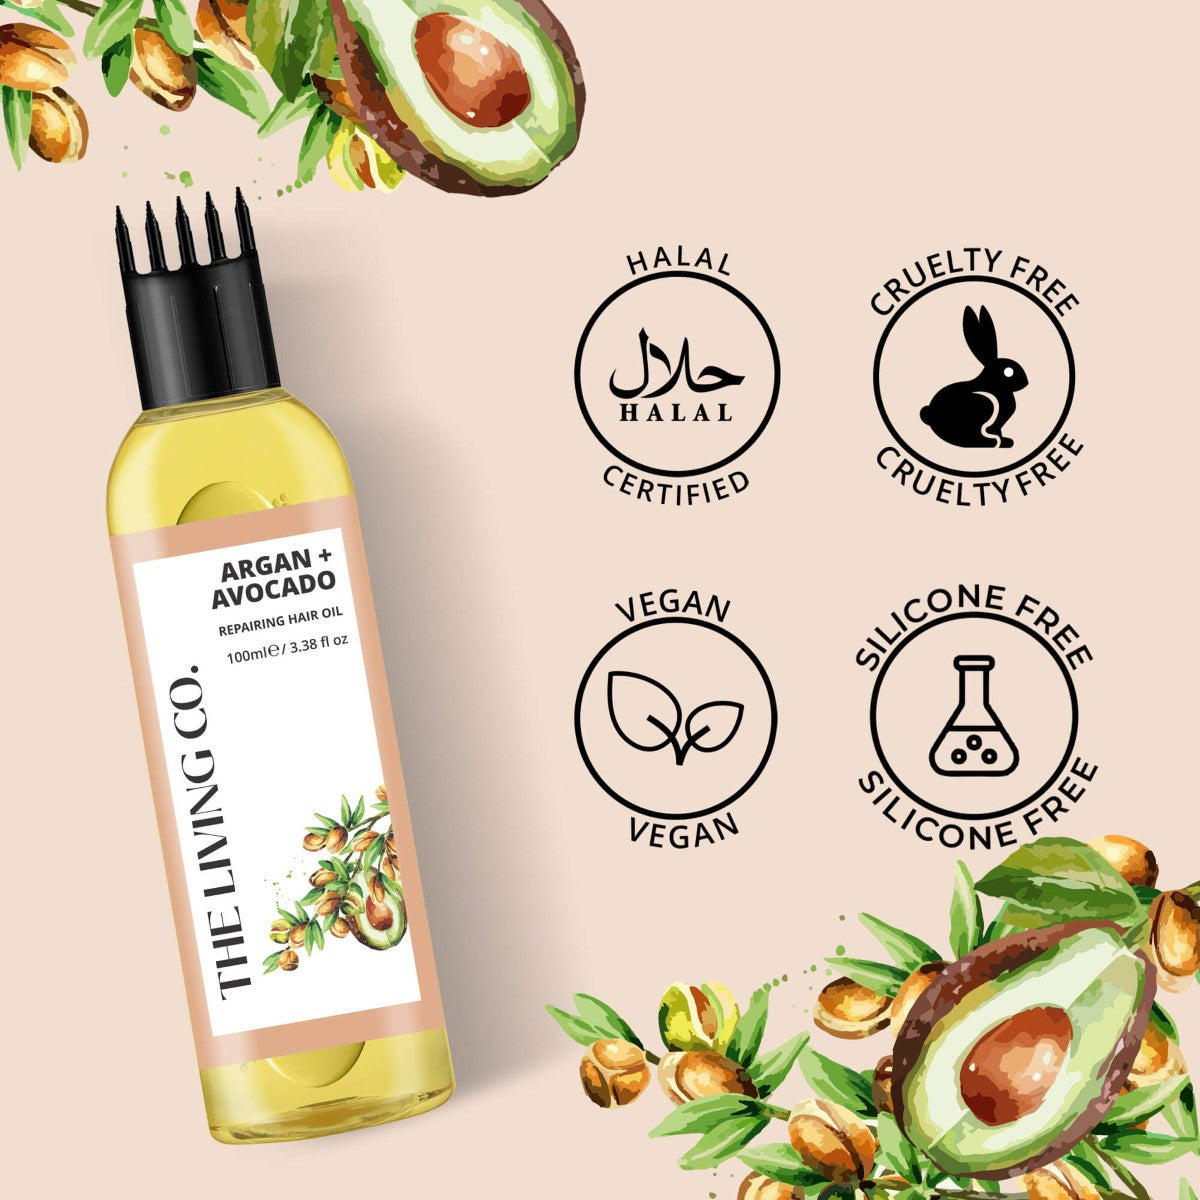 Argan + Avocado Hair Oil